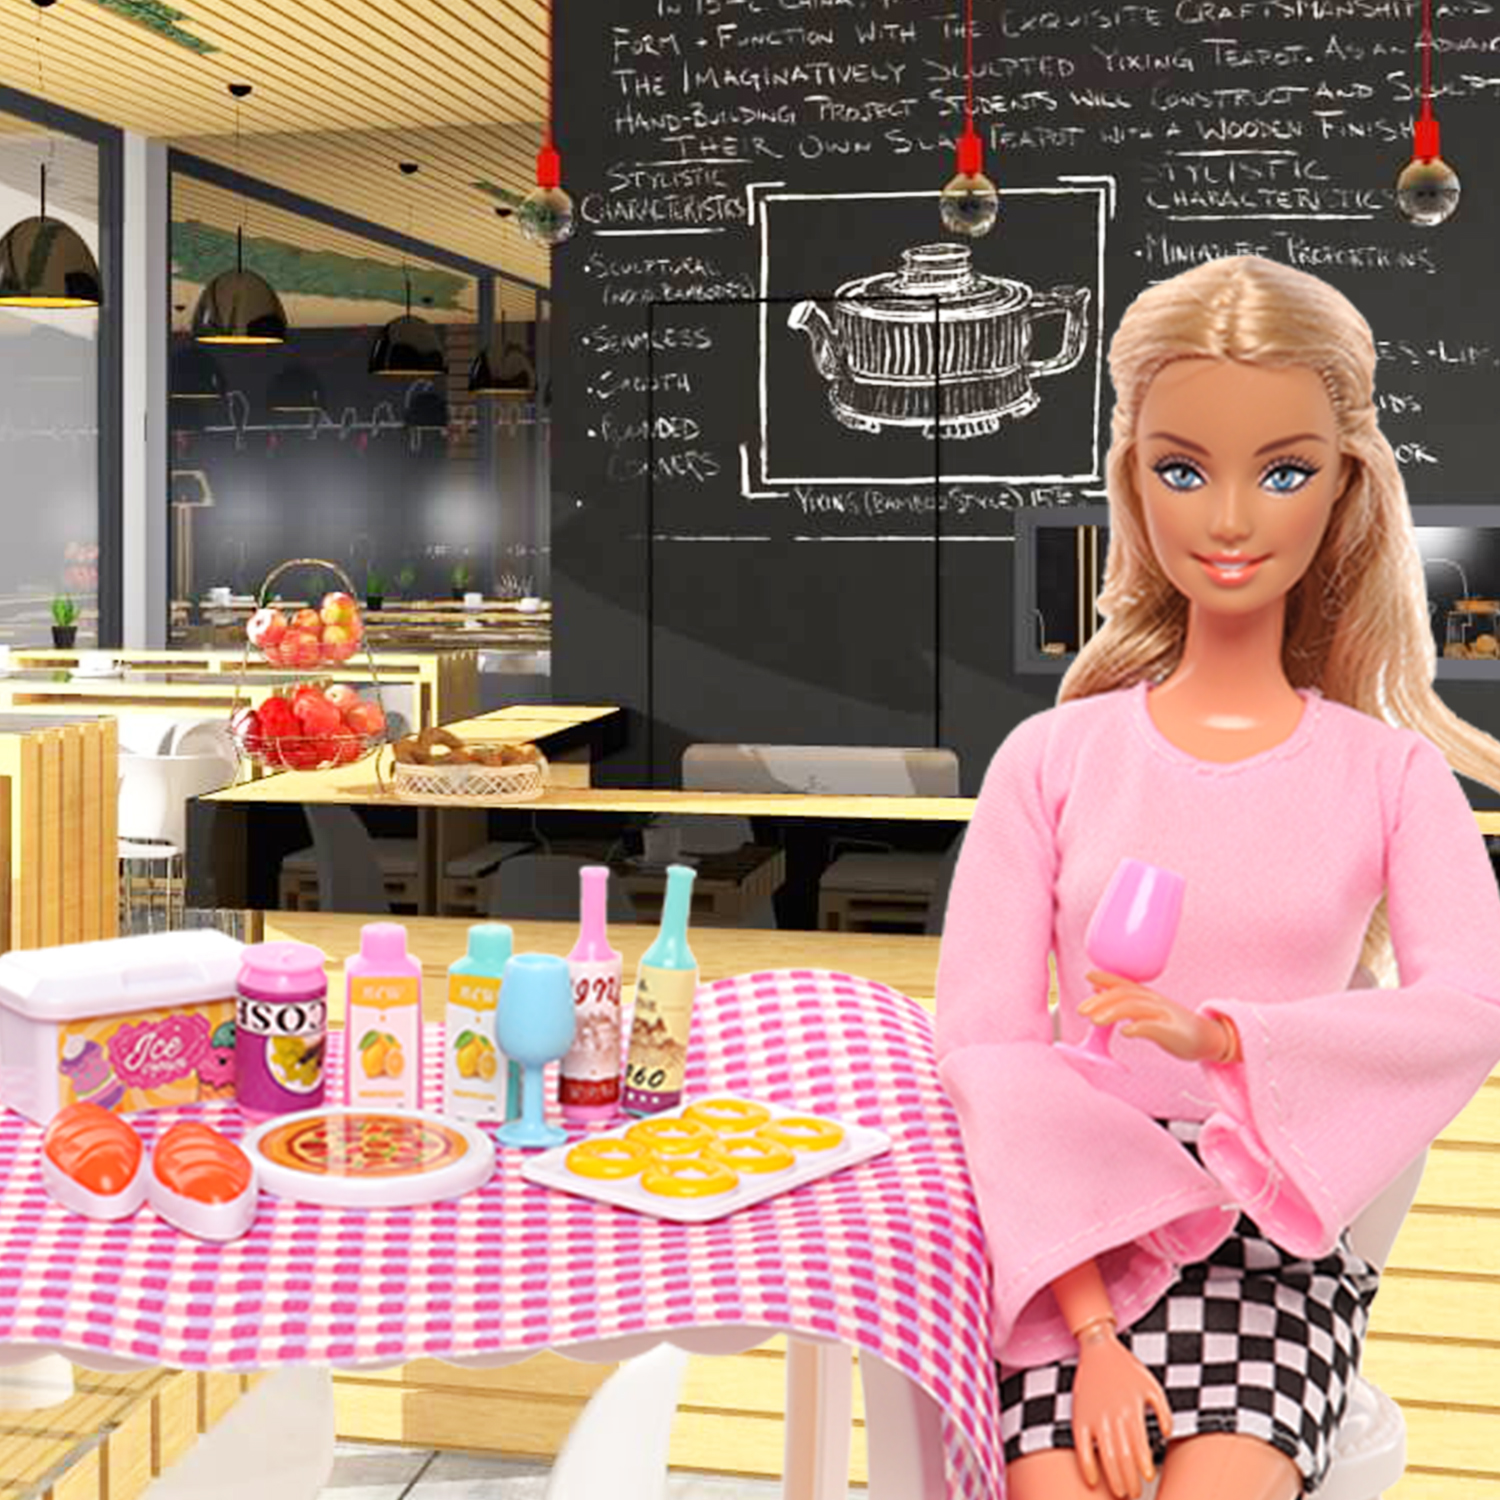 Barwa 33 items jogo de comida para barbie = 9 conjunto de